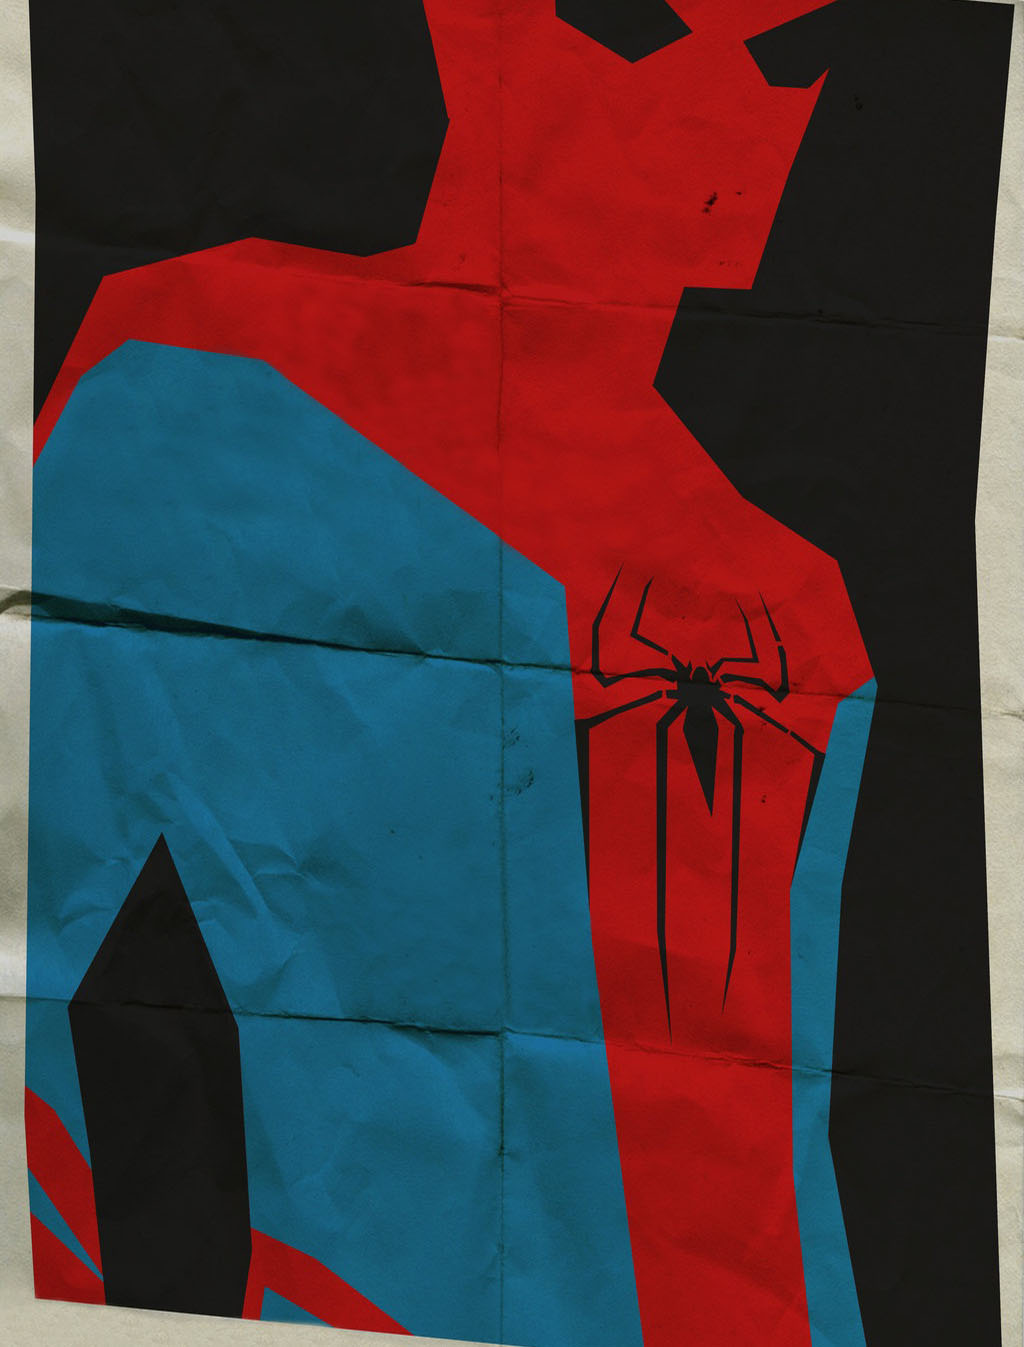 Spider Man Minimal Wallpapers